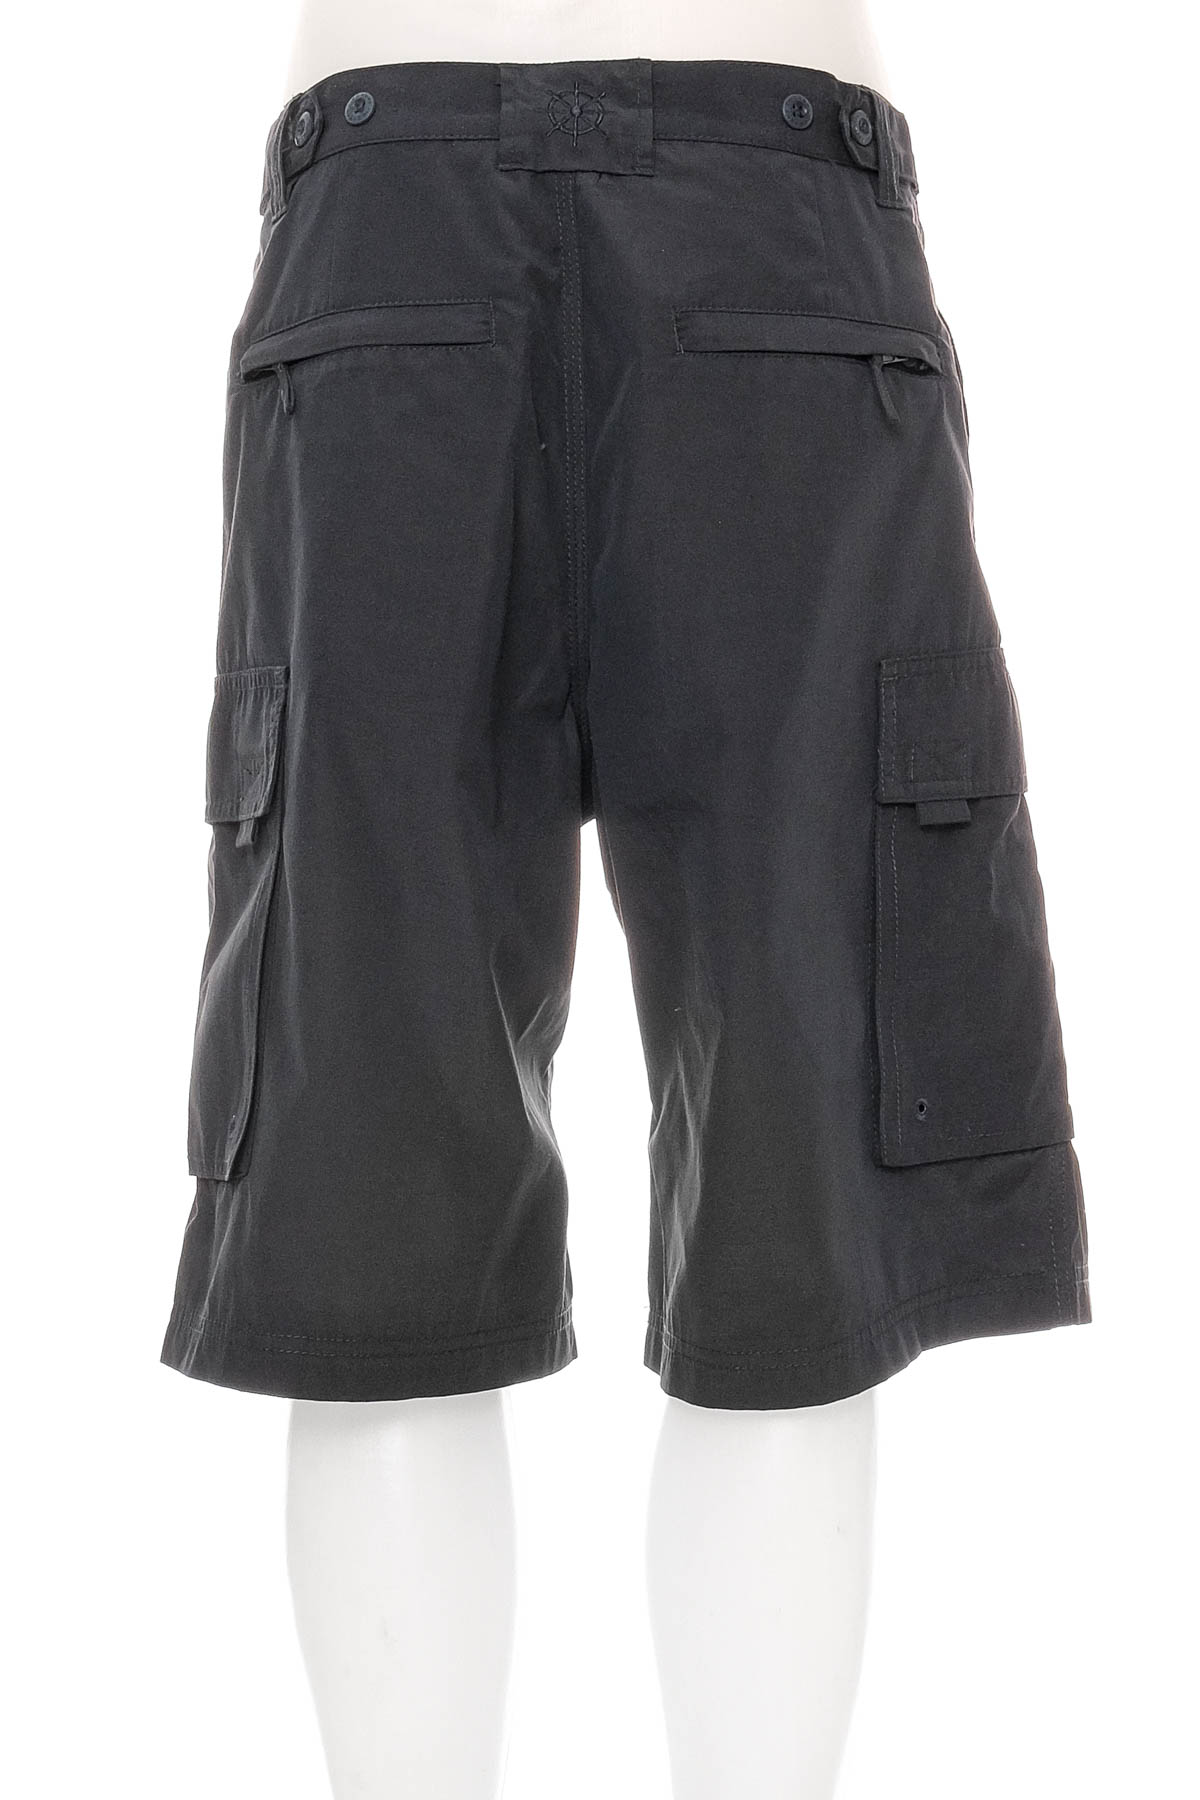 Men's shorts - DECKERS - 1